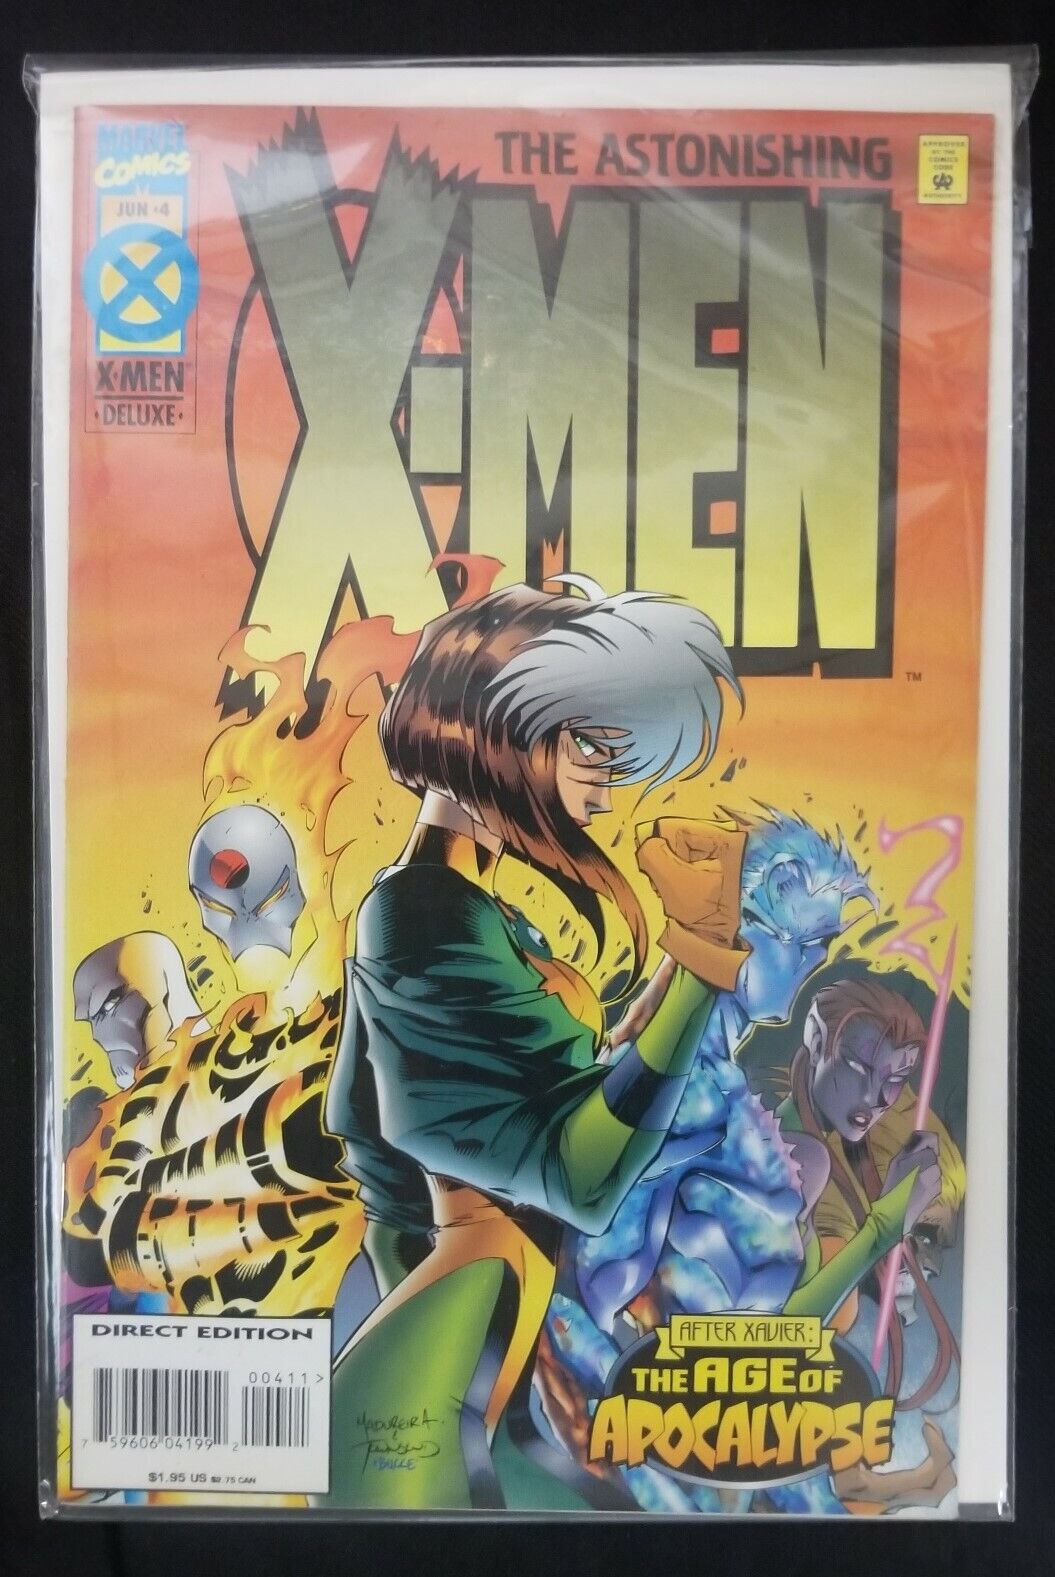 THE ASTONISHING X-MEN Vol.1 No.4 June 1995 (Marvel) 🍒 | eBay